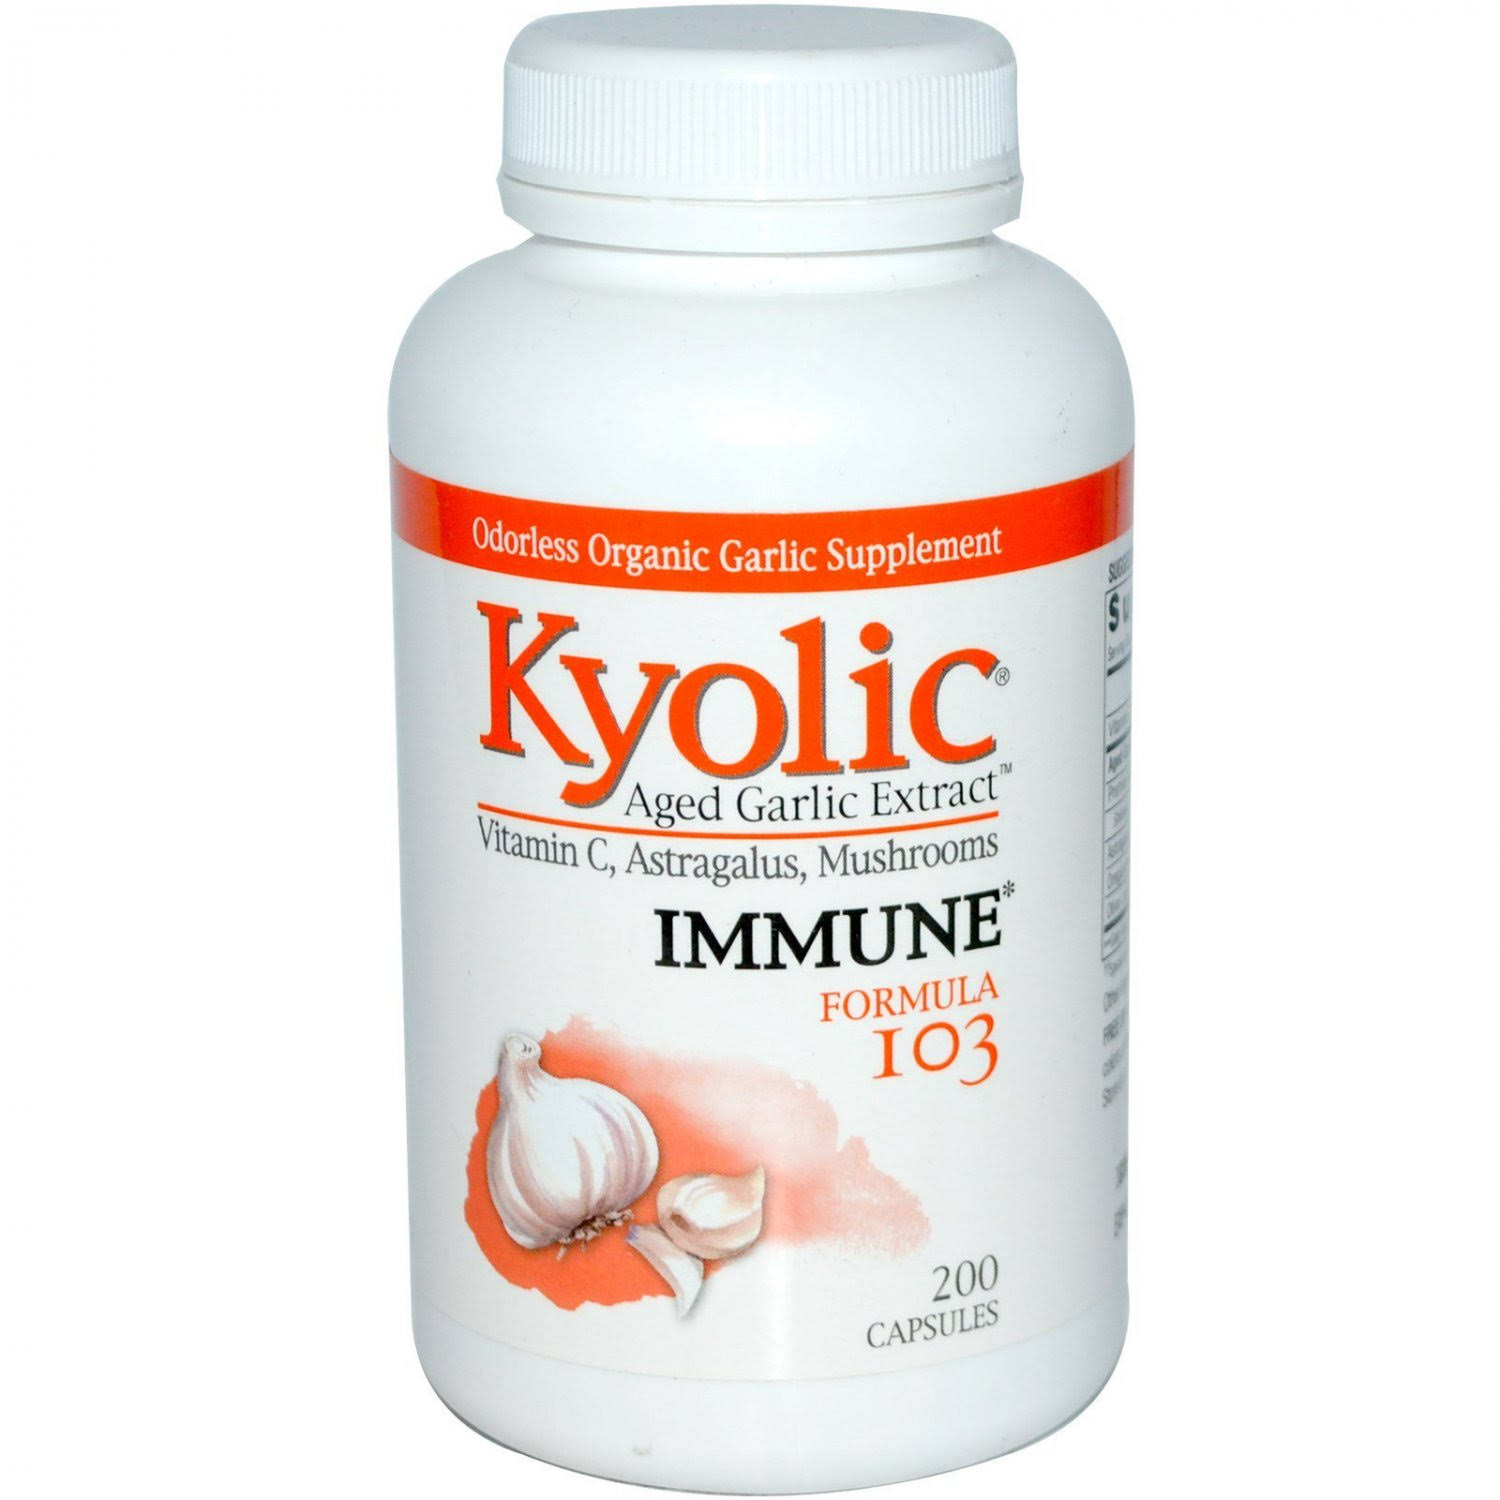 Kyolic Aged Garlic Extract Immune Formula Supplement - 200 Capsules